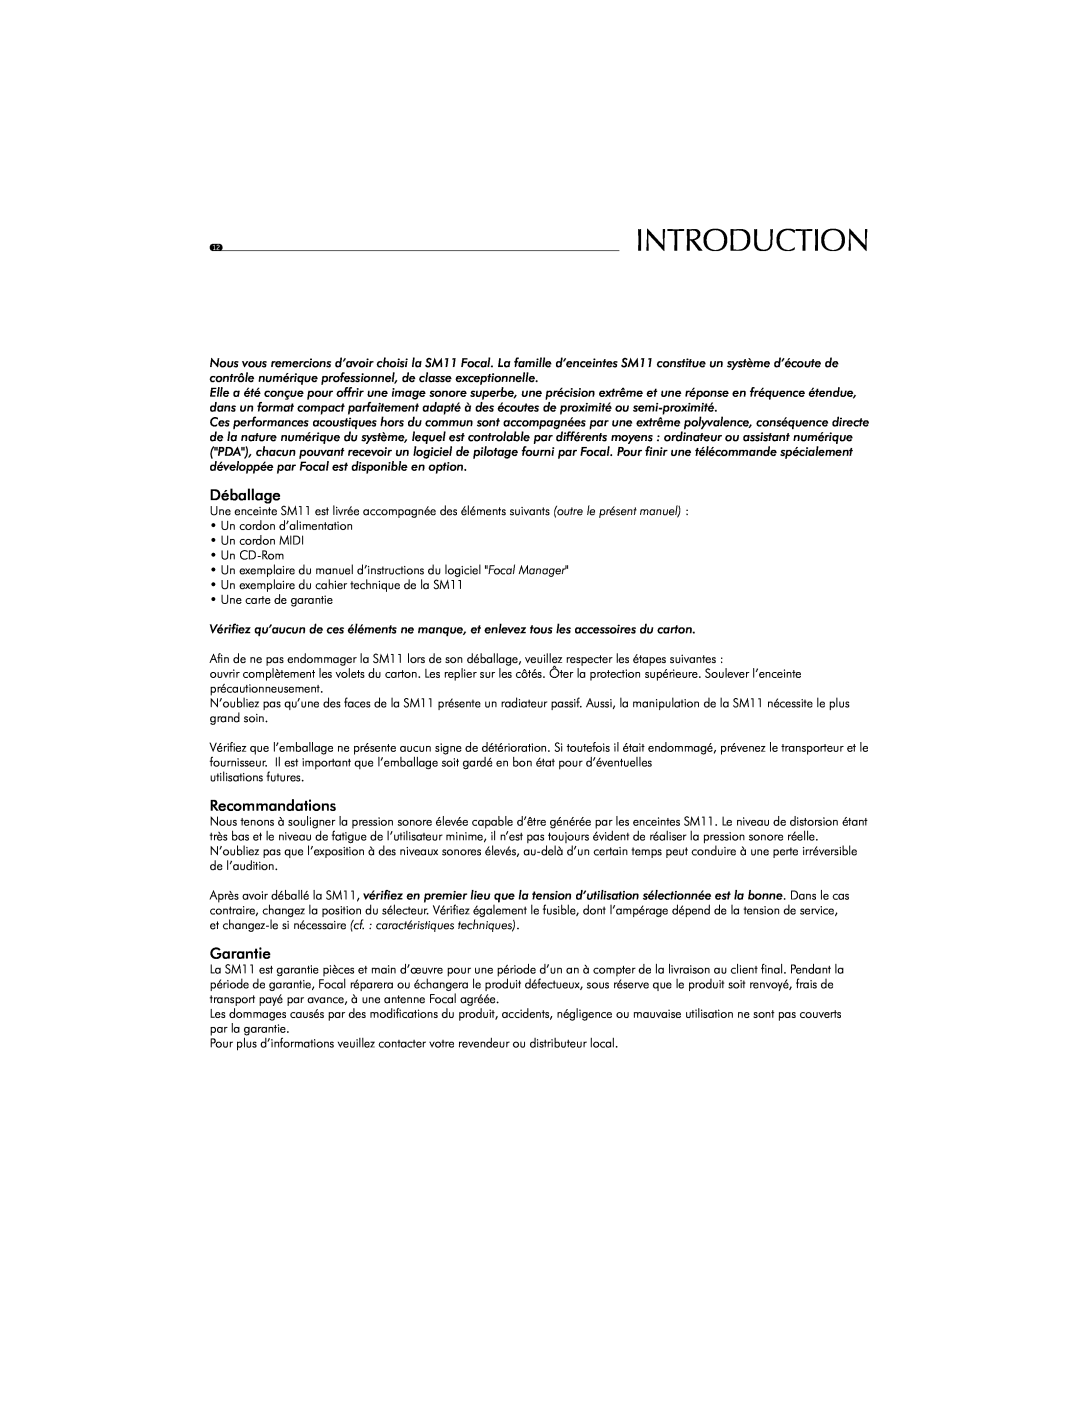 Focal SM11 user manual Déballage, Recommandations, Garantie, Introduction 